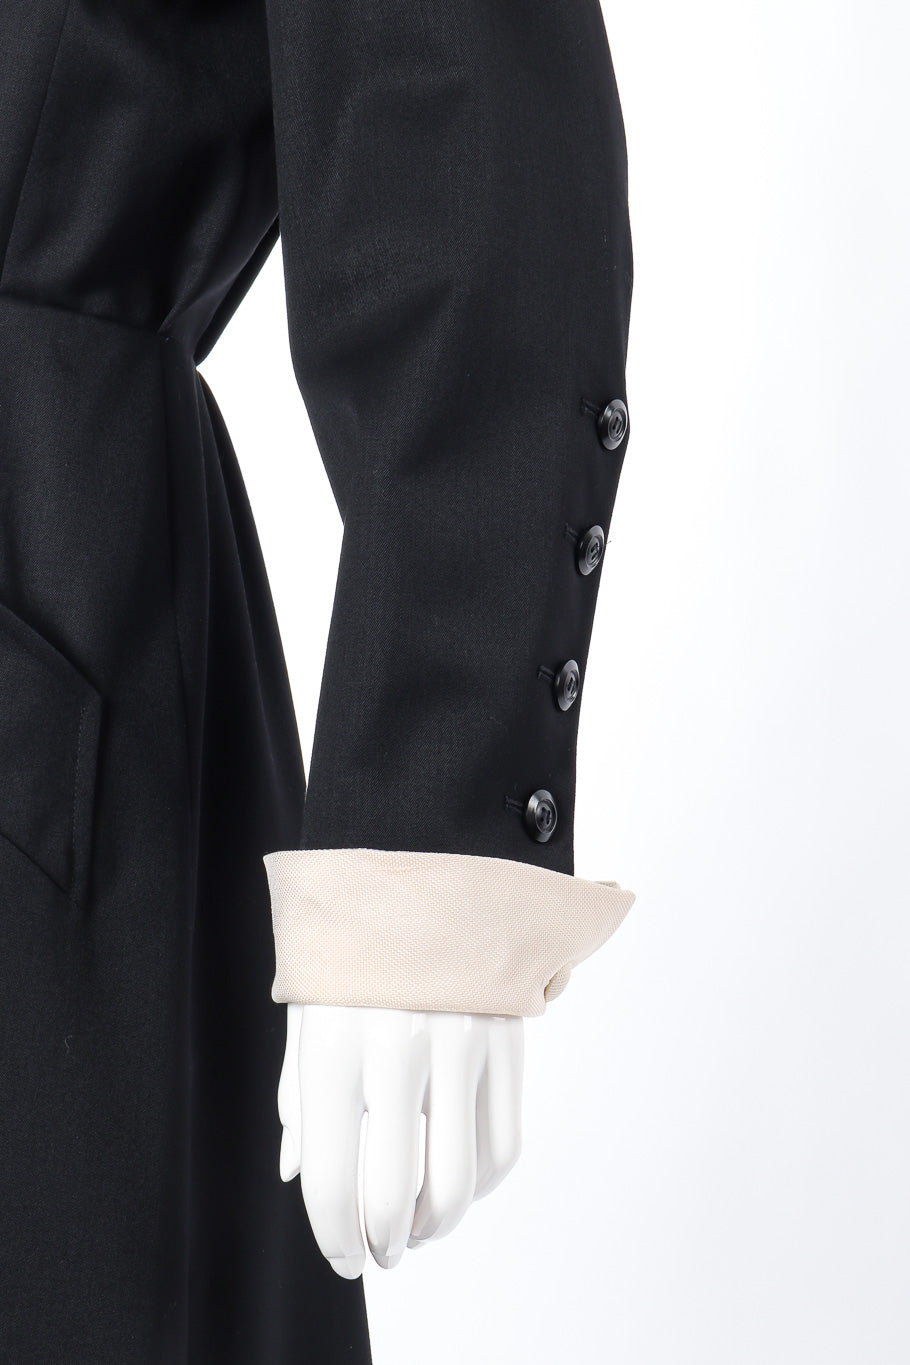 Vintage Yves Saint Laurent Collared Blazer Dress sleeve cuff on mannequin closeup @Recessla